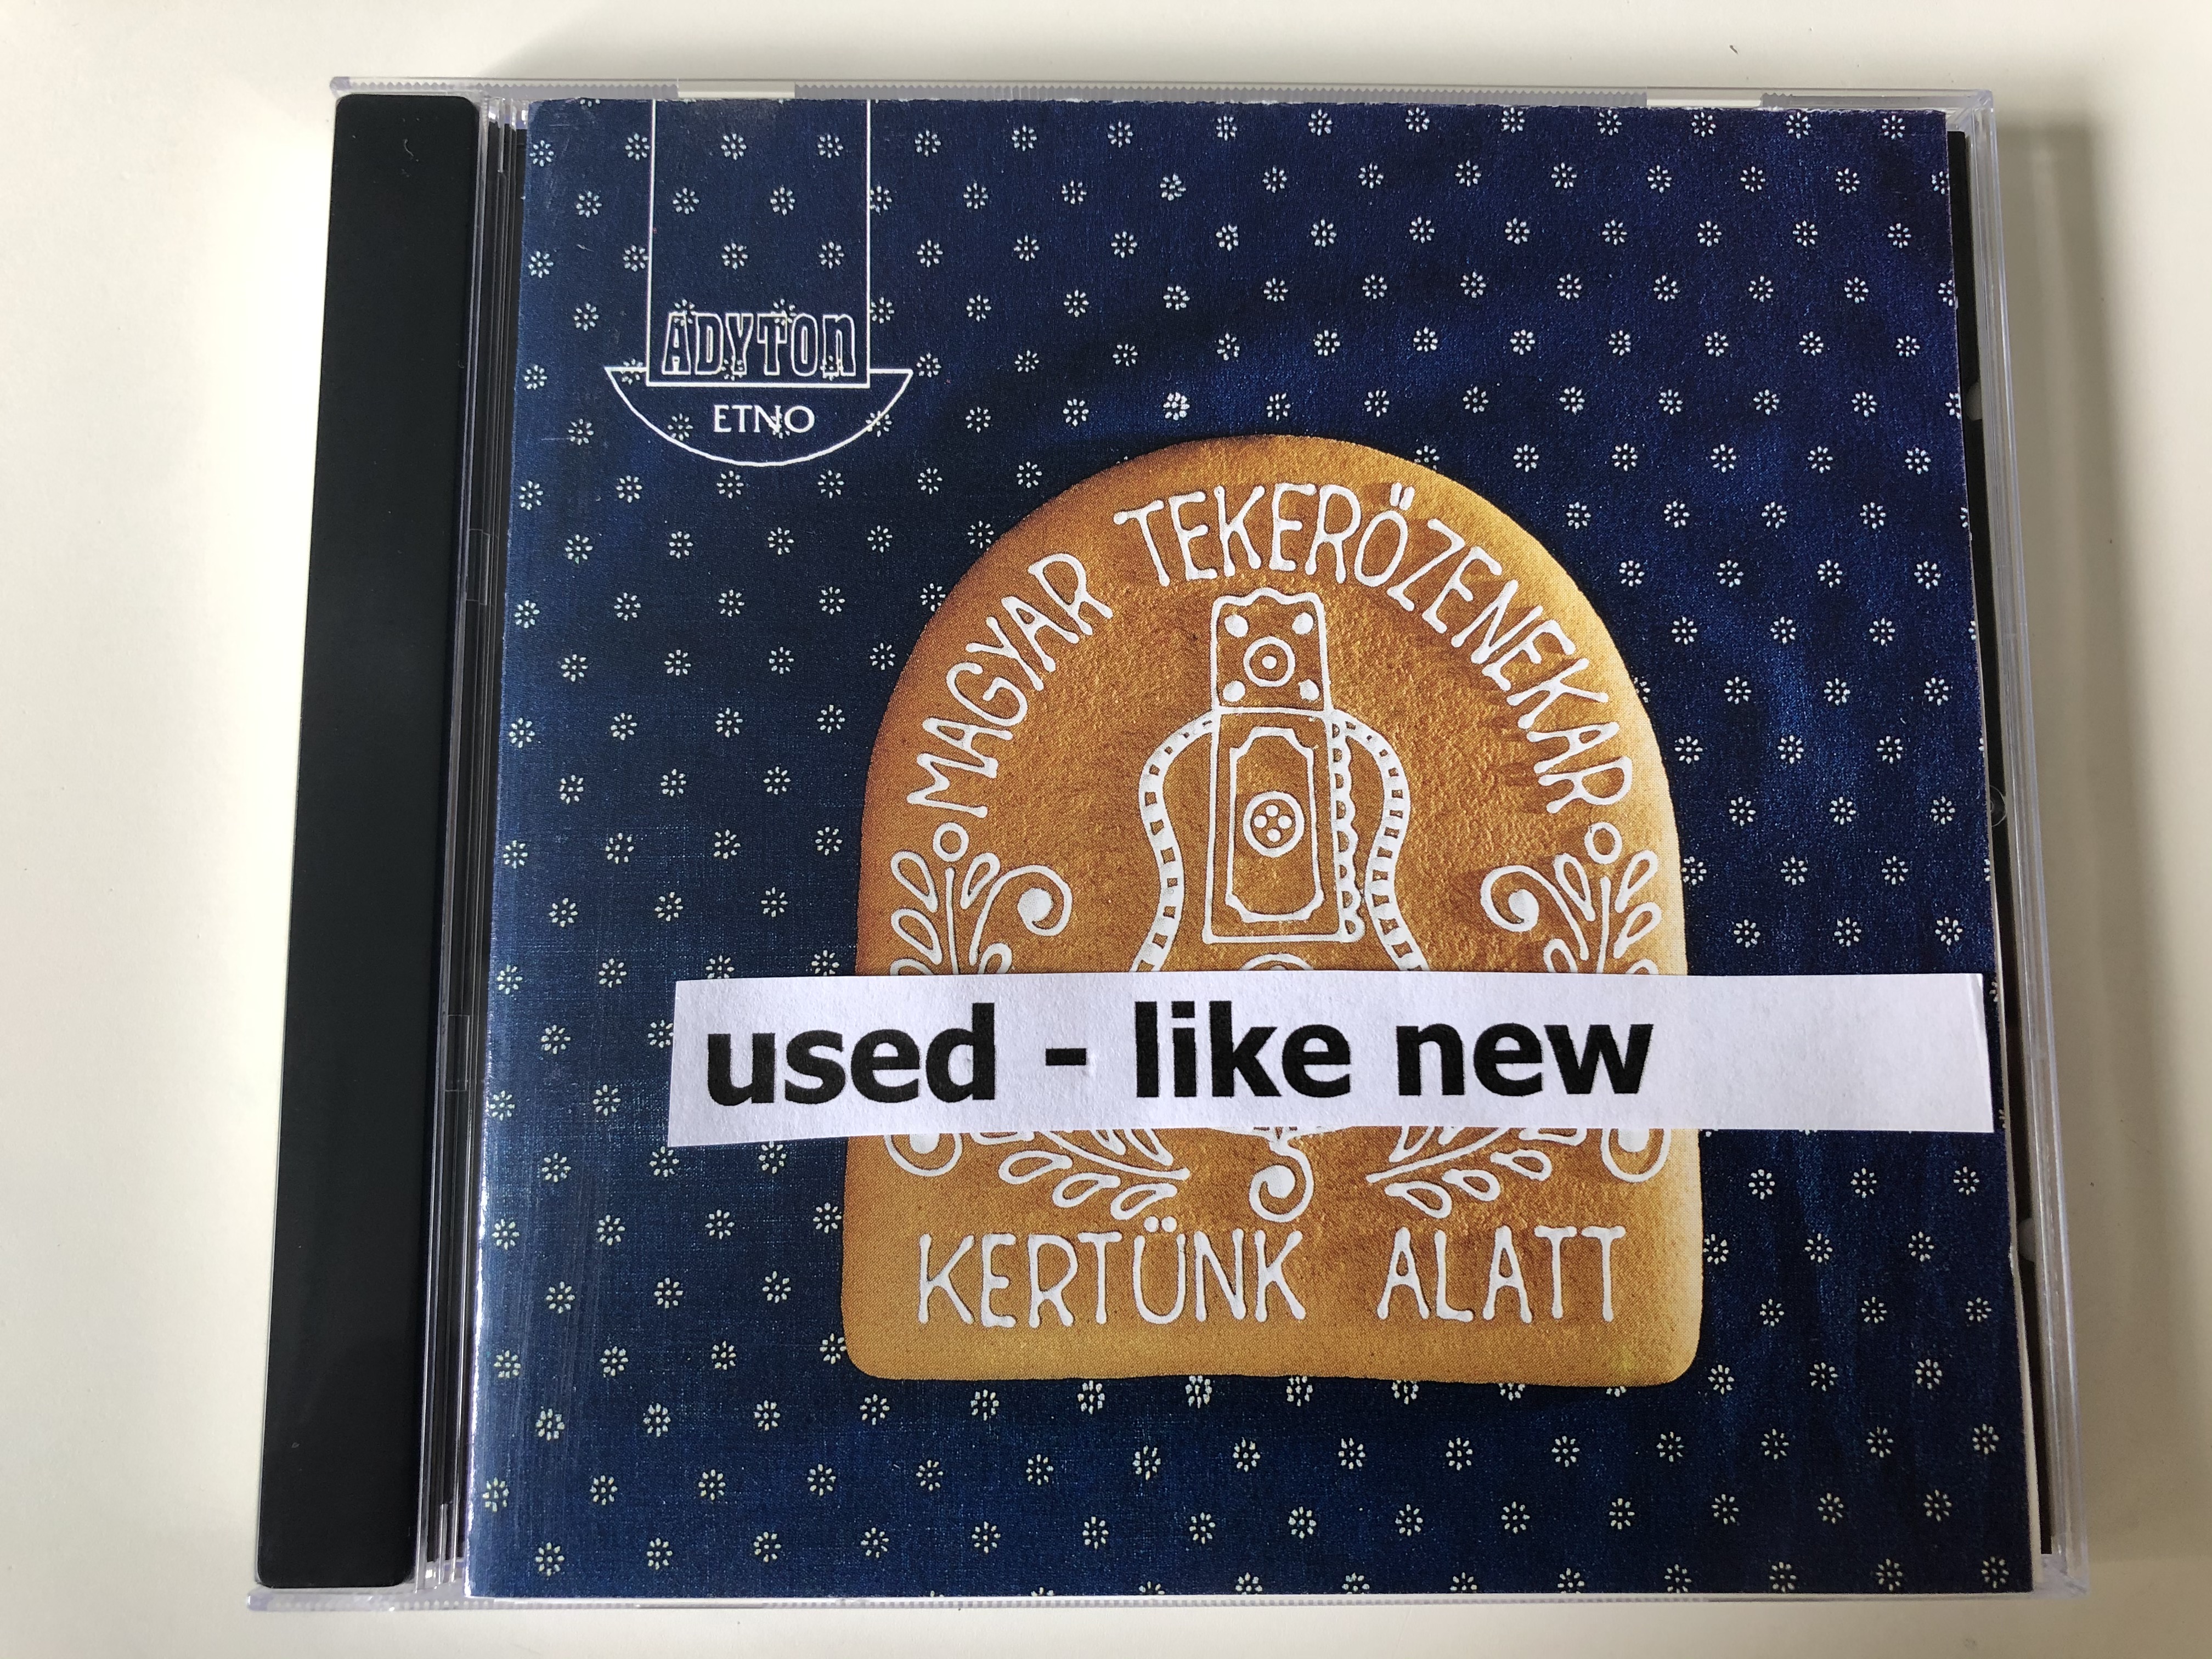 magyar-teker-zenekar-kert-nk-alatt-fon-records-audio-cd-1997-e01-2-.jpg